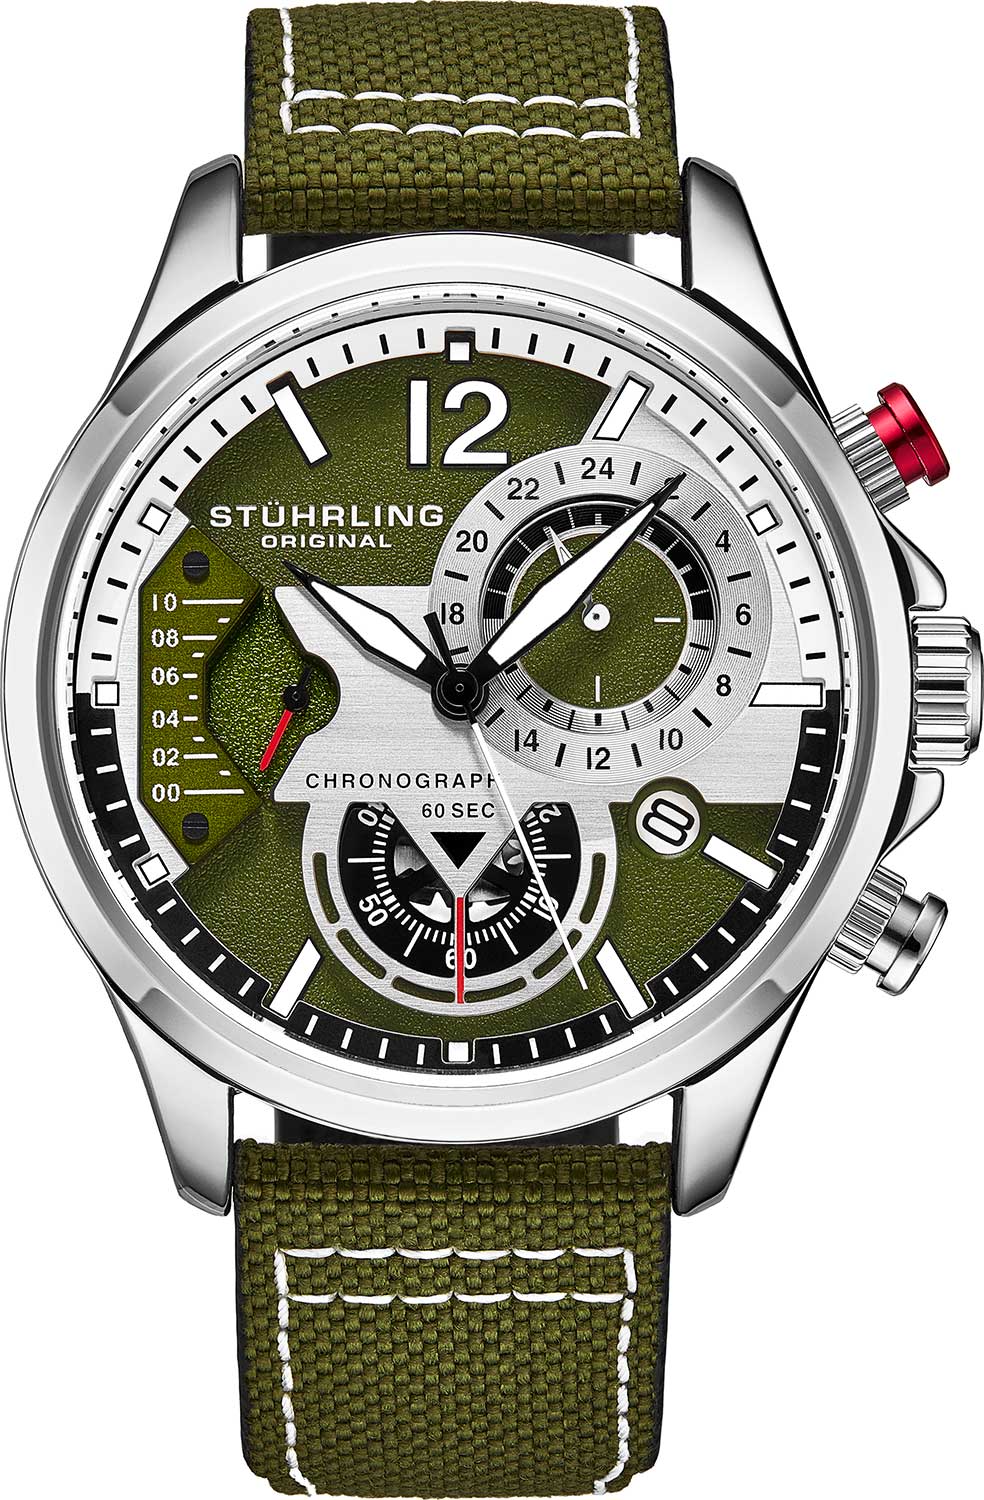 Наручные часы Stuhrling 908.03 с хронографом